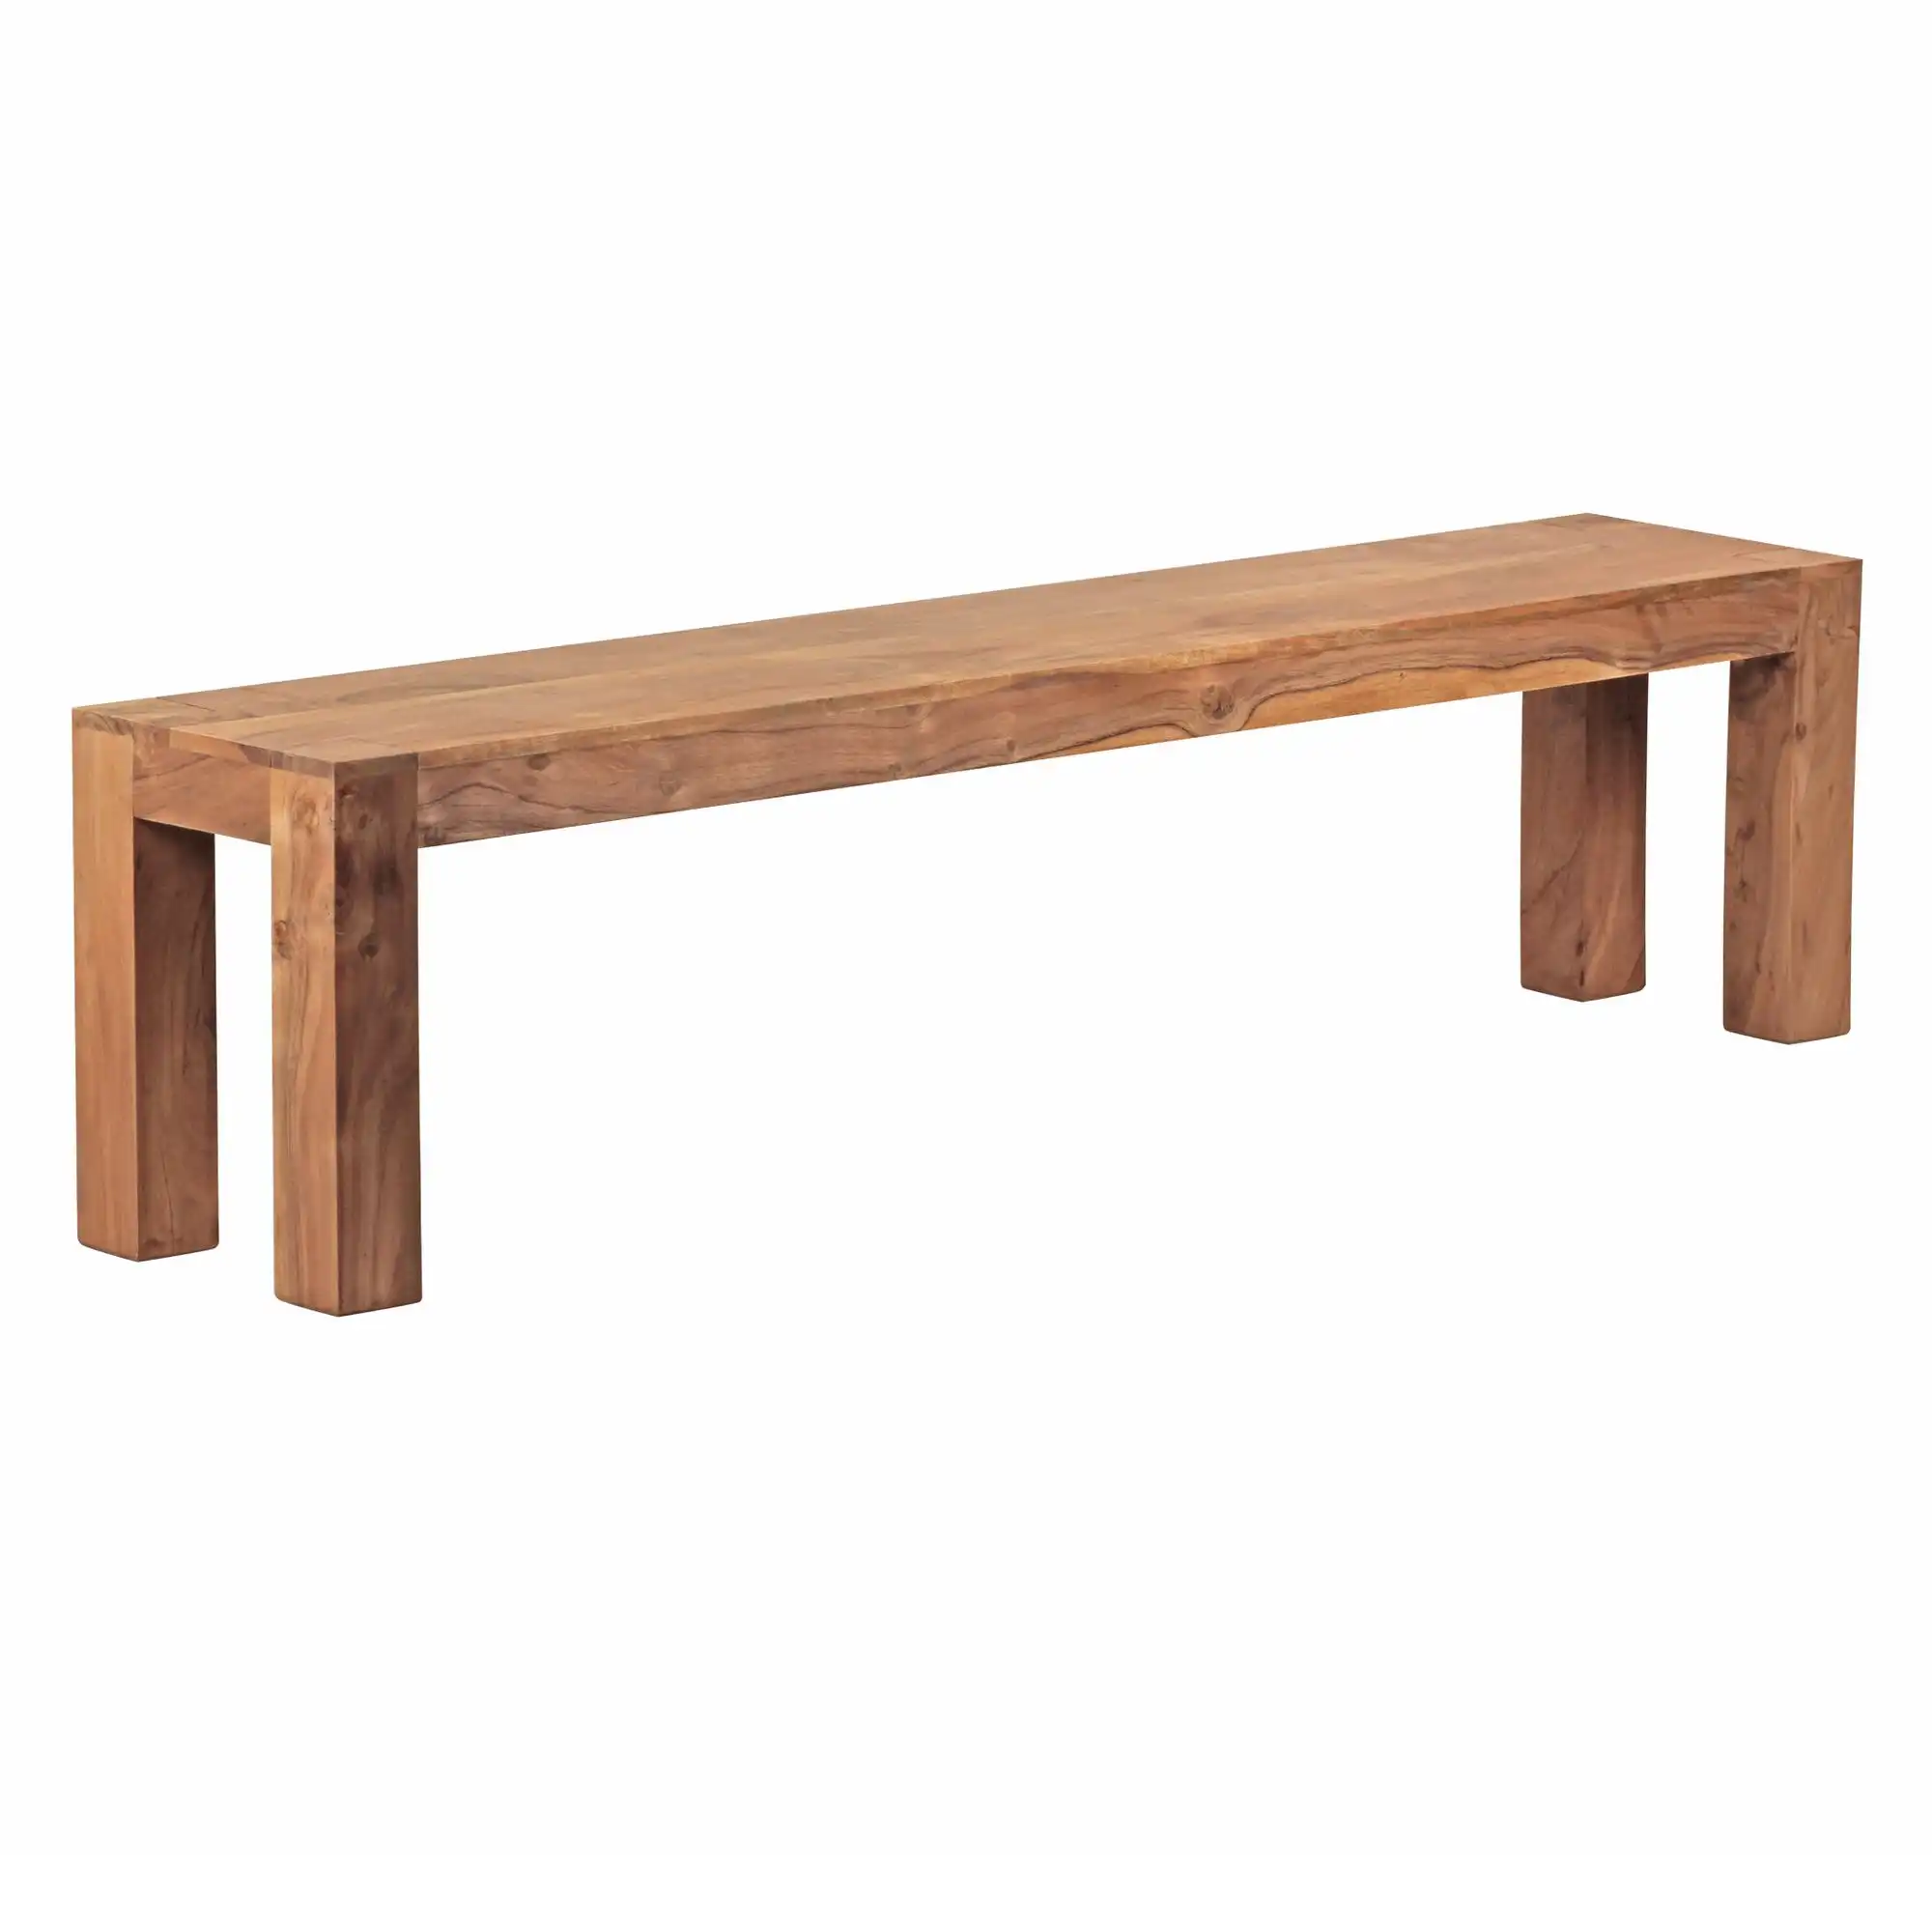 Wooden Azuka Bench (KD - Flat Pack)
(Seat Size : 130x41 cm.) - popular handicrafts